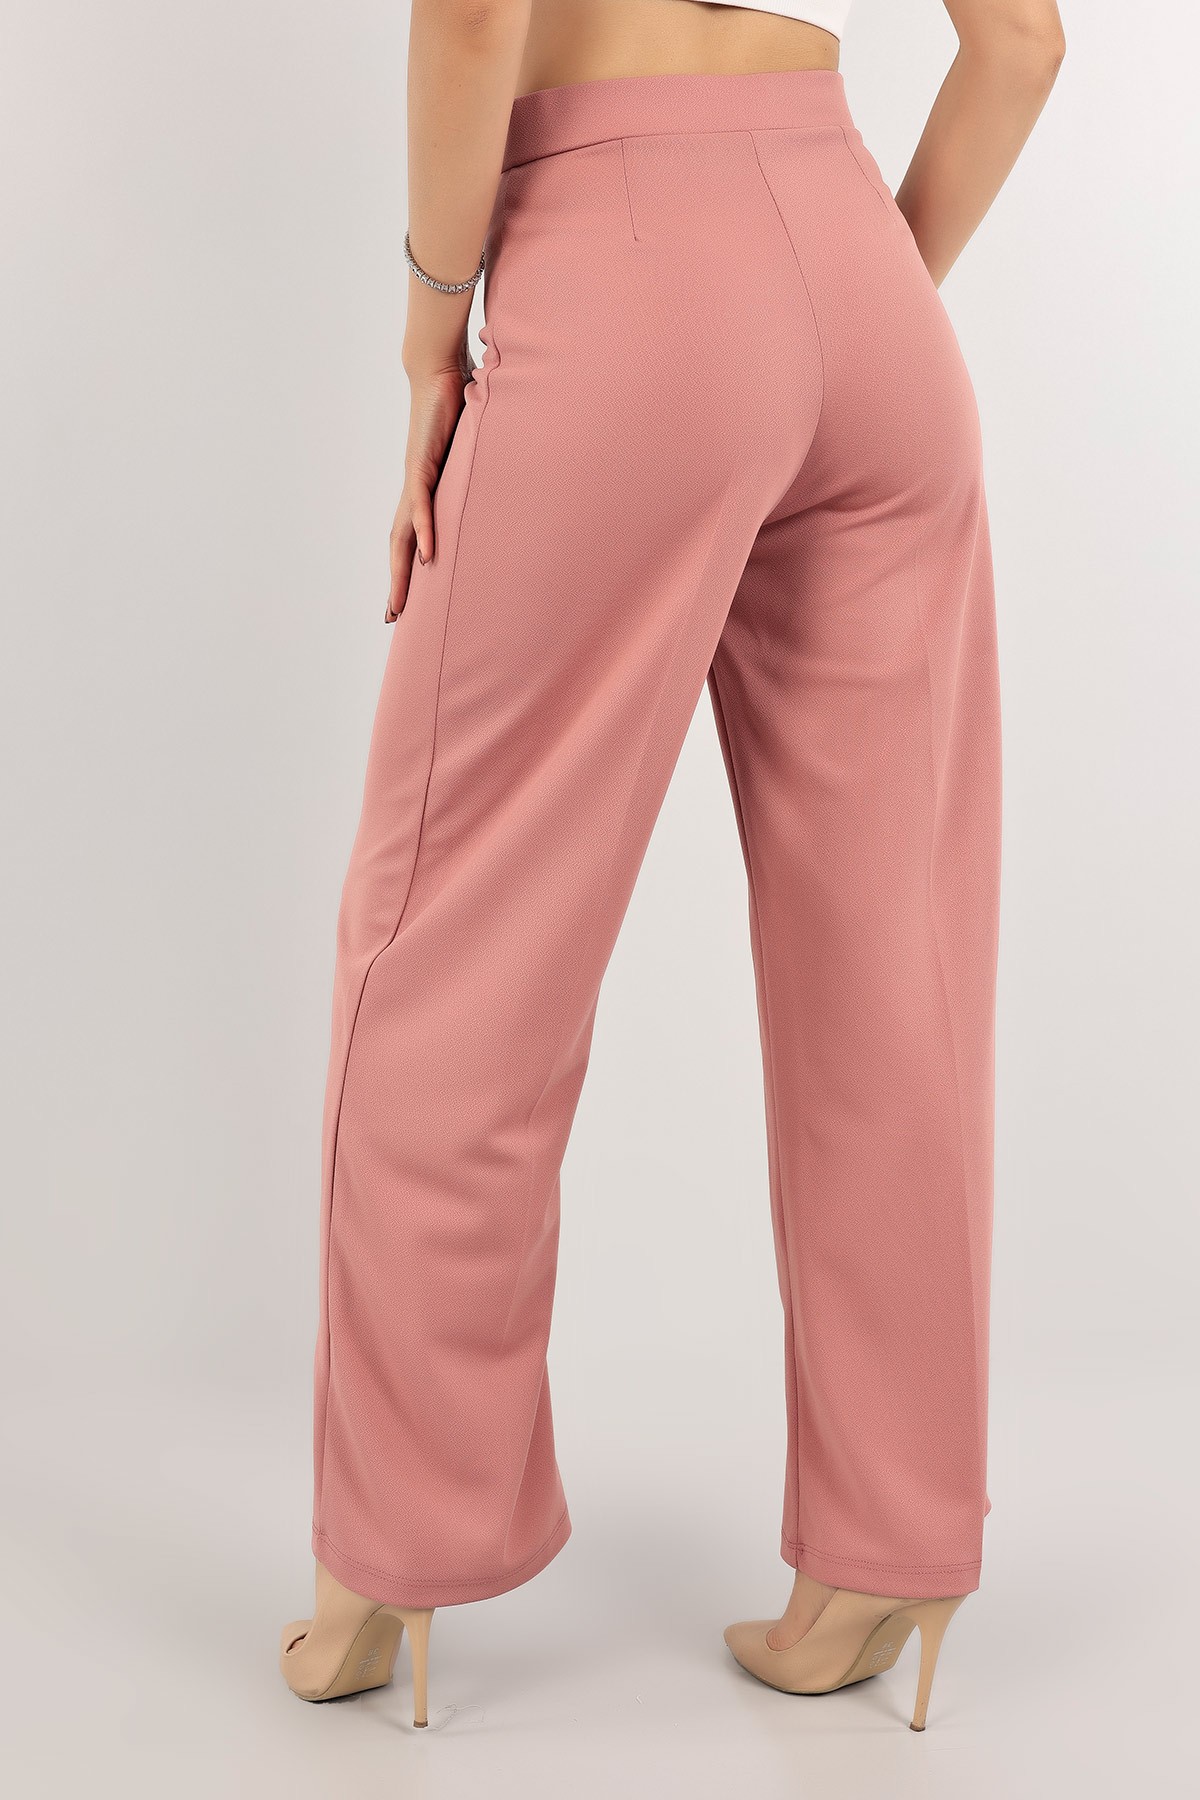 Formal pink pants